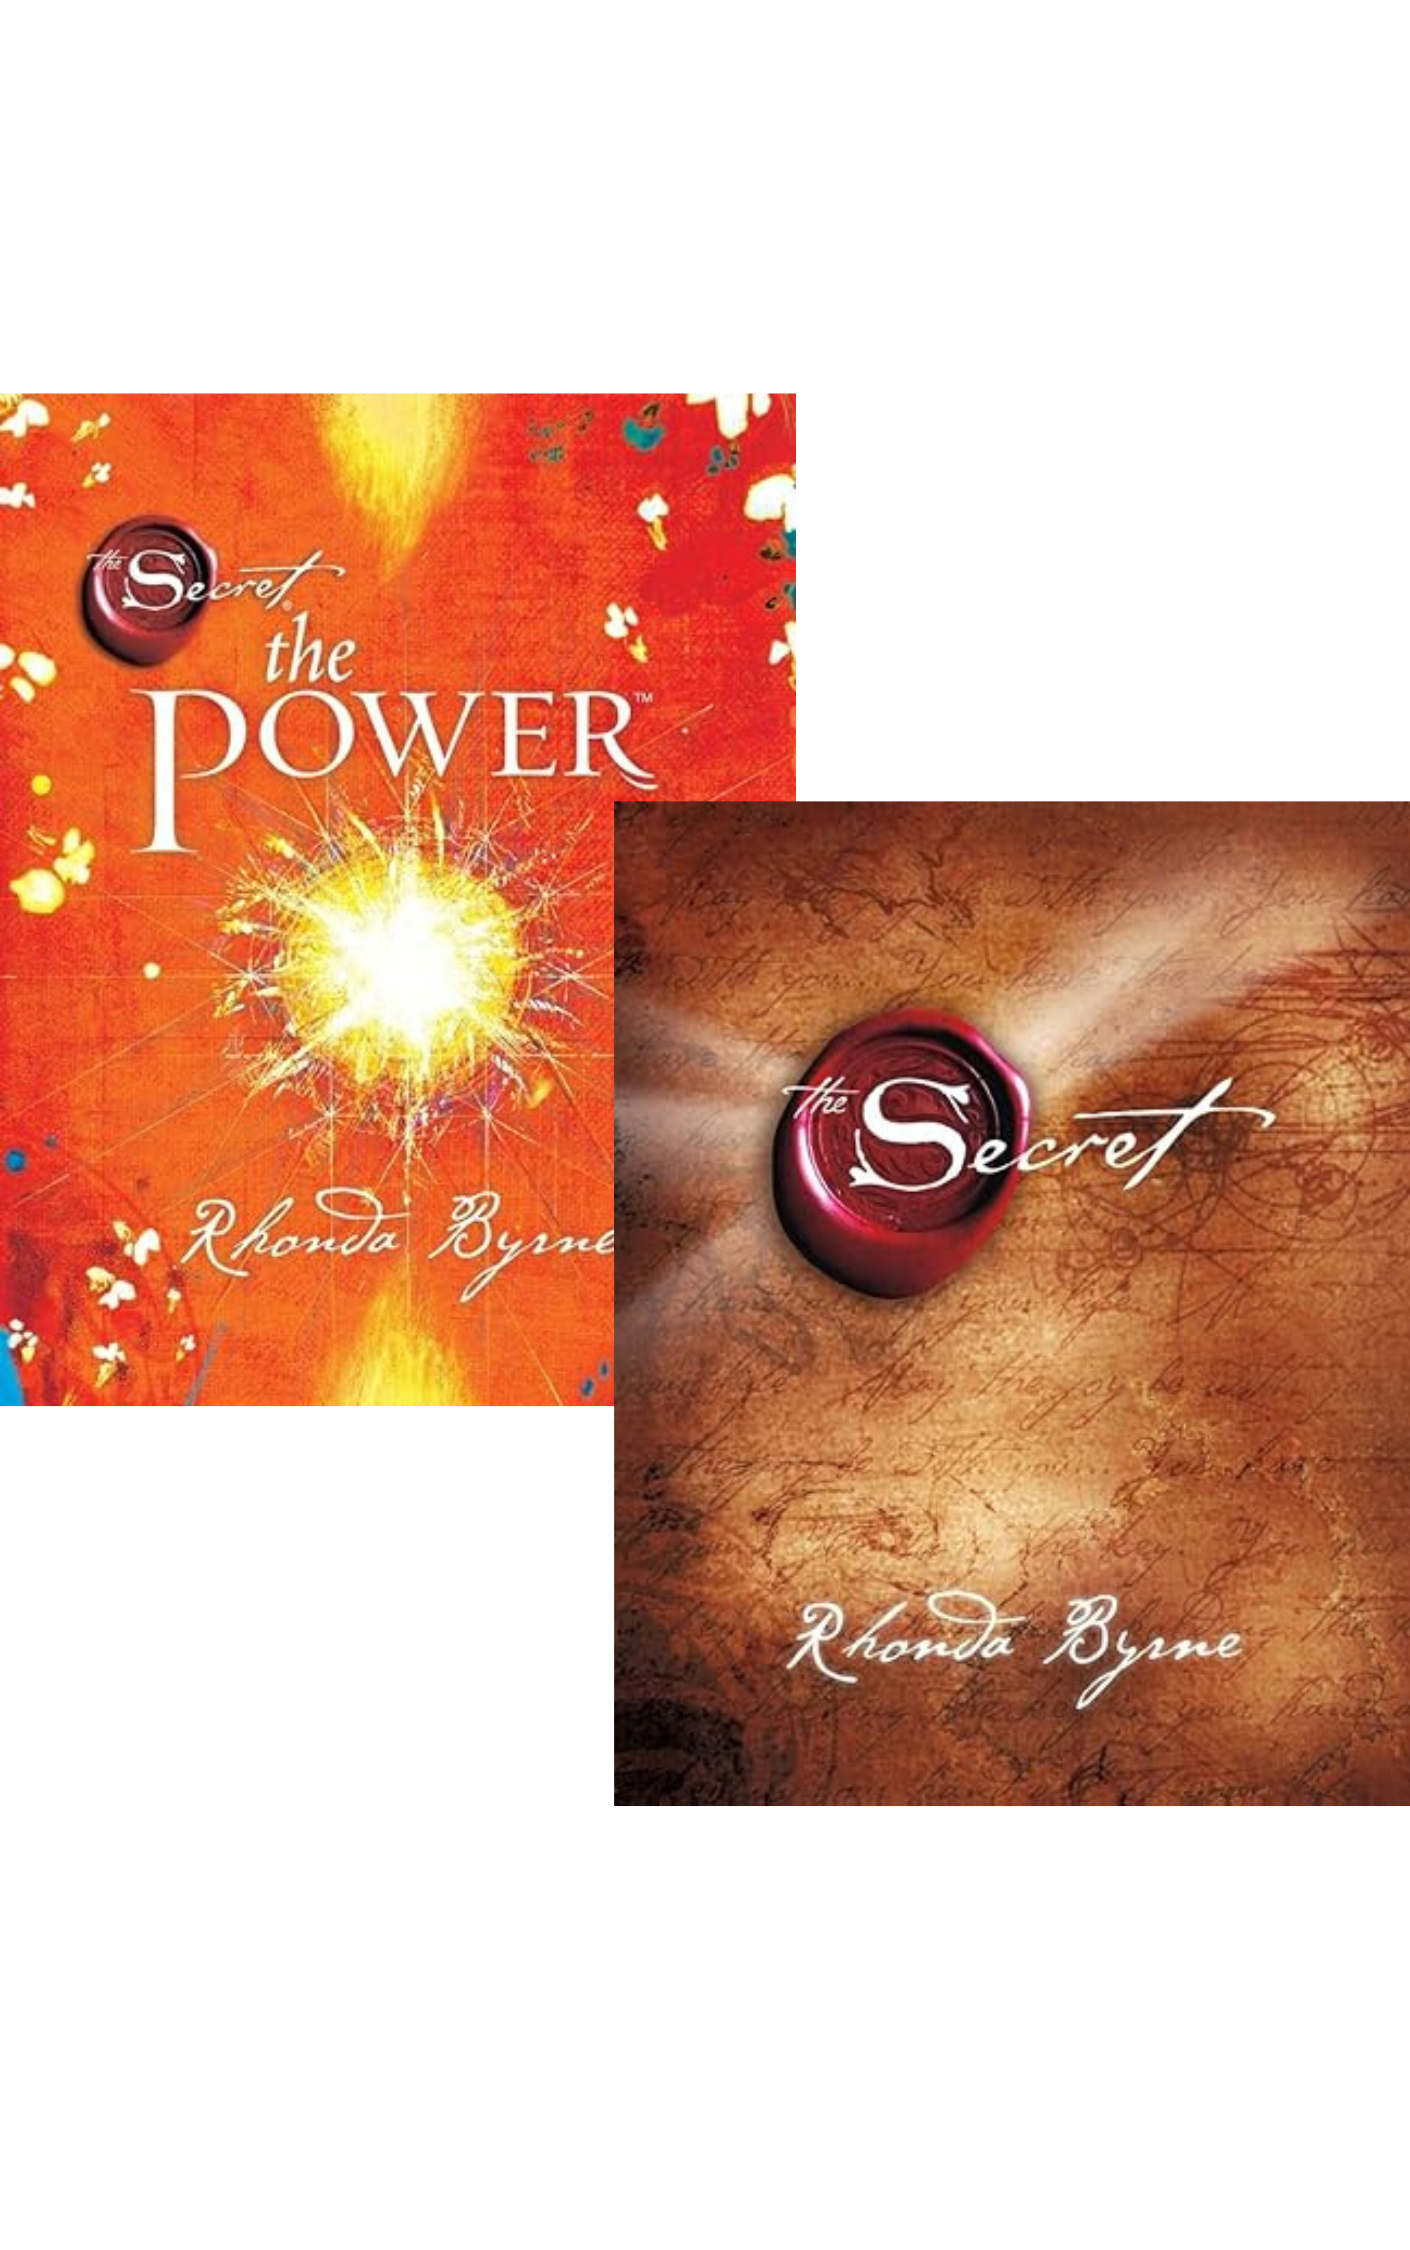 The Power & The Secret by Rhonda Byrne - Combo 2 books (Hardcover)